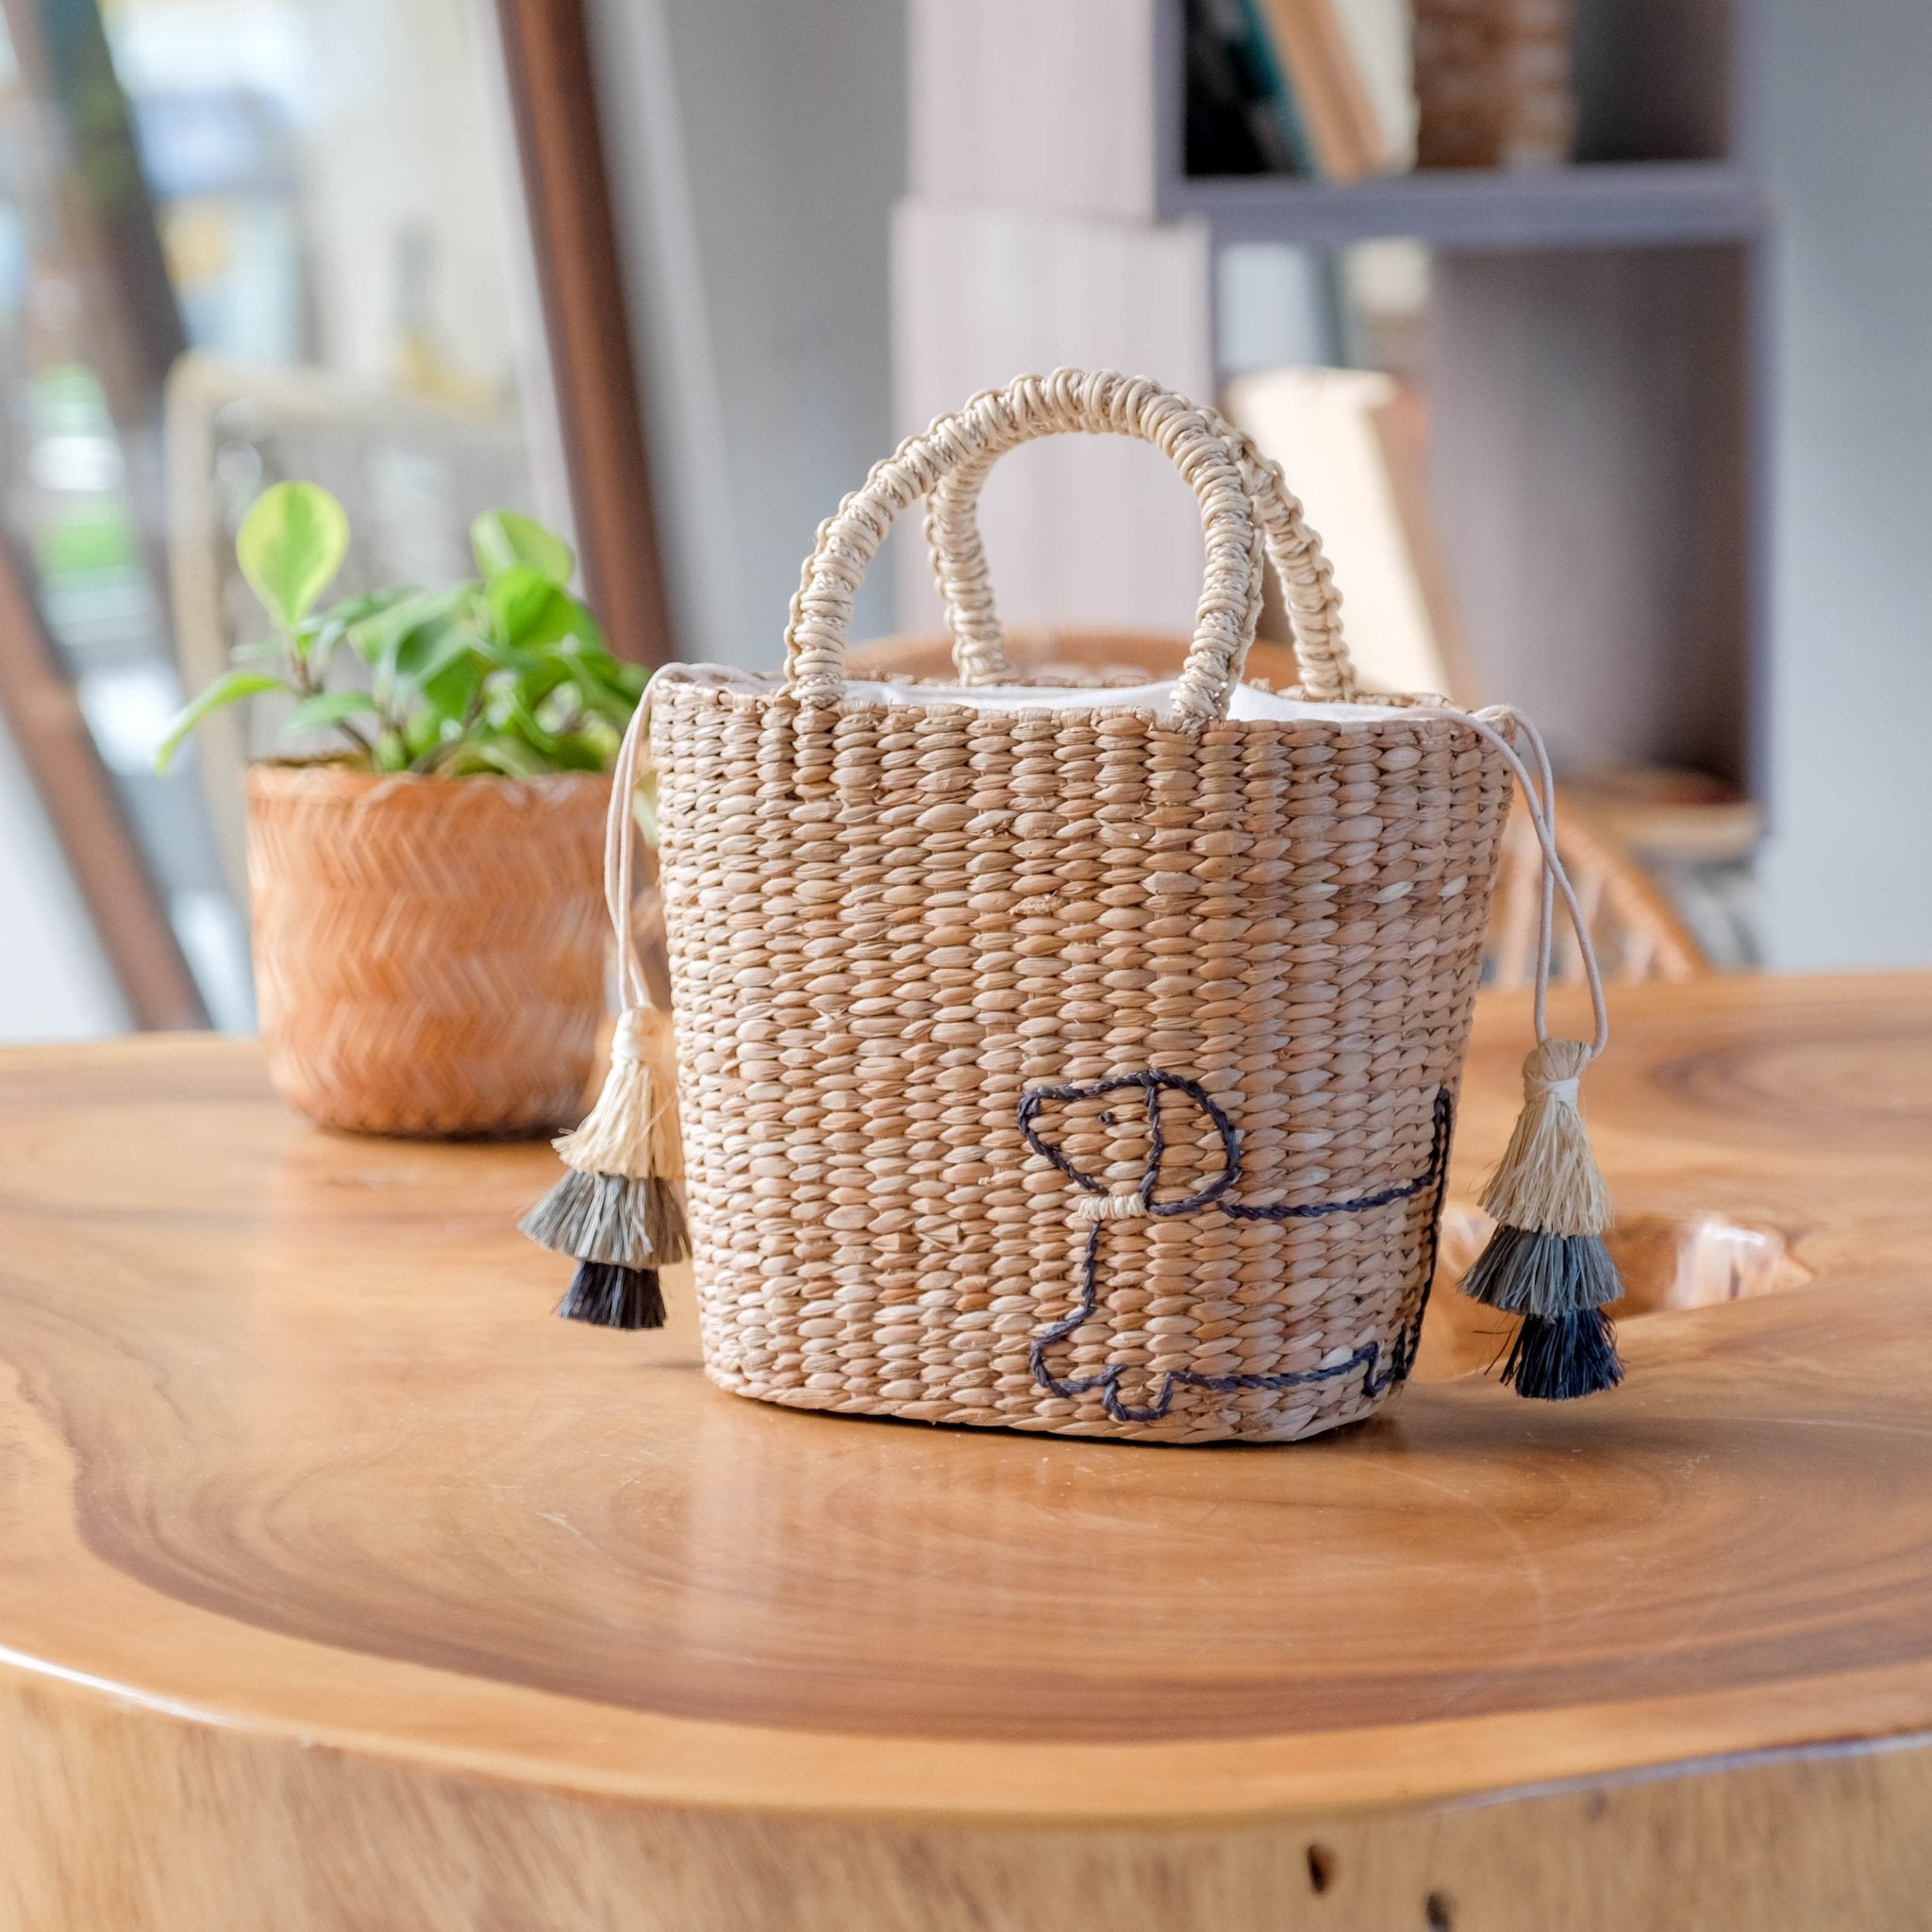 Handbags - Mini Woven Tote Bag with Embroidered Dachshund - Straw Tote | LIKHA - LIKHÂ